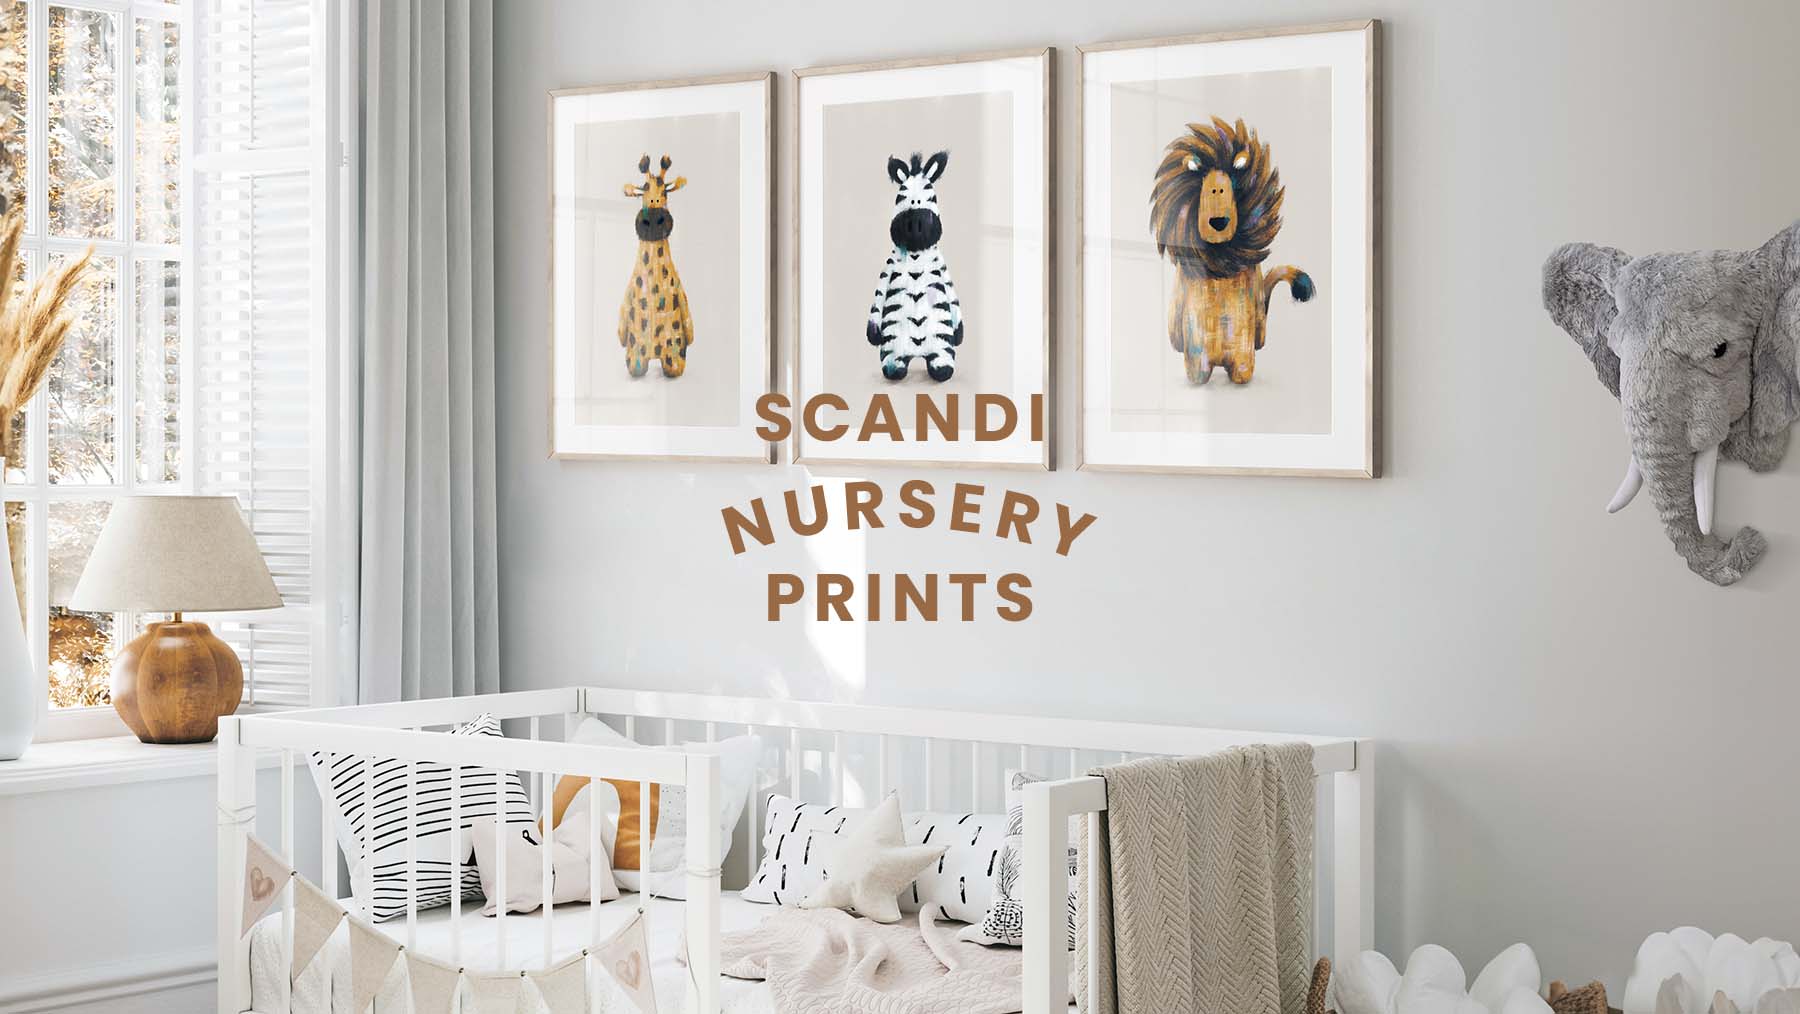 Tigercub children's safari nursery prints, lion nursery print, zebra nursery print, and giraffe nursery print